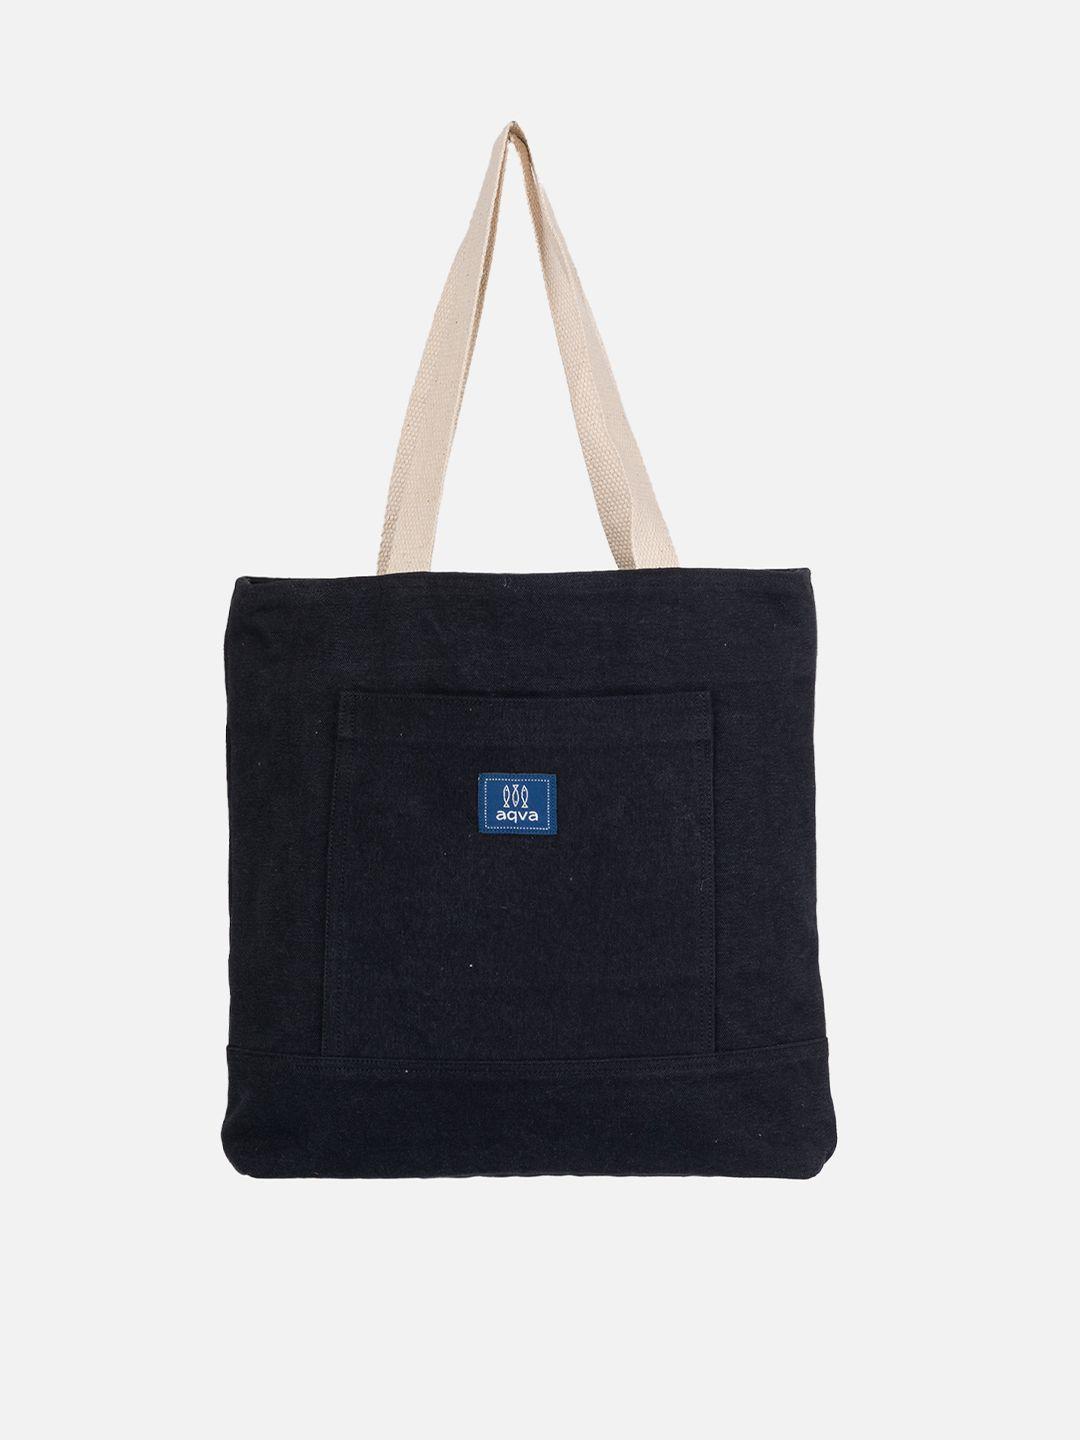 aqva black shopper cotton canvas tote bag